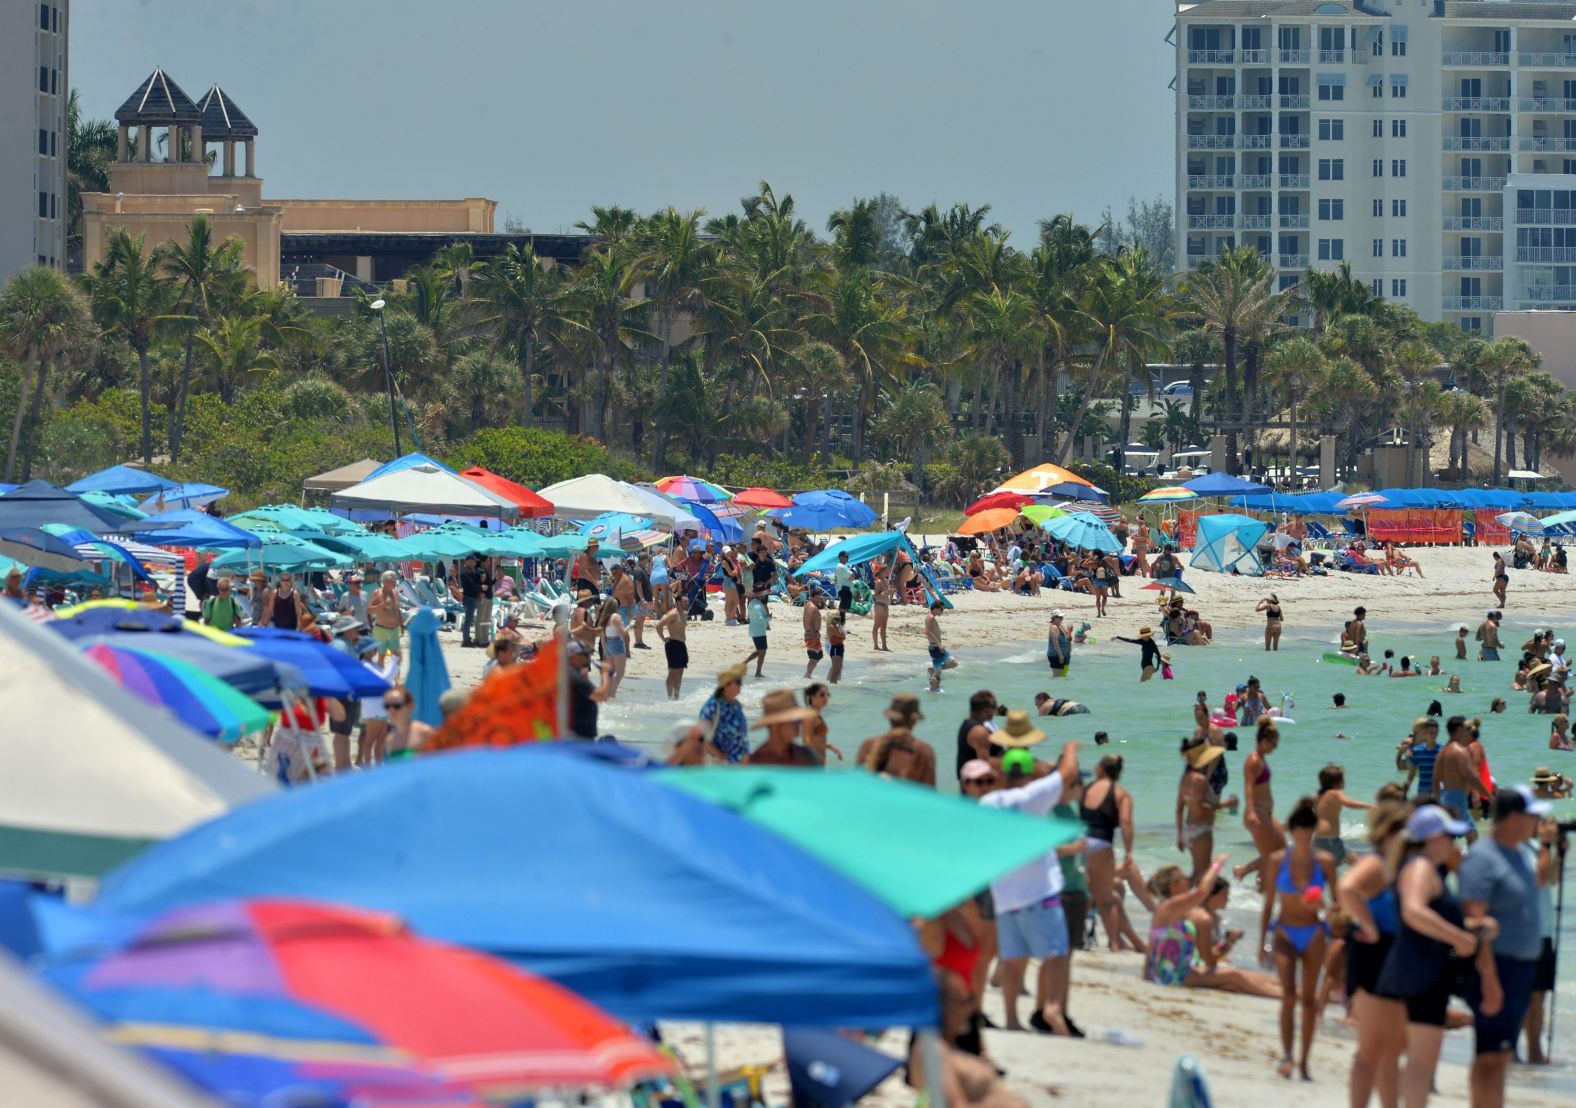 Spectators gather on Florida's Lido Beach on Saturday to watch the Sarasota Powerboat Grand Prix.